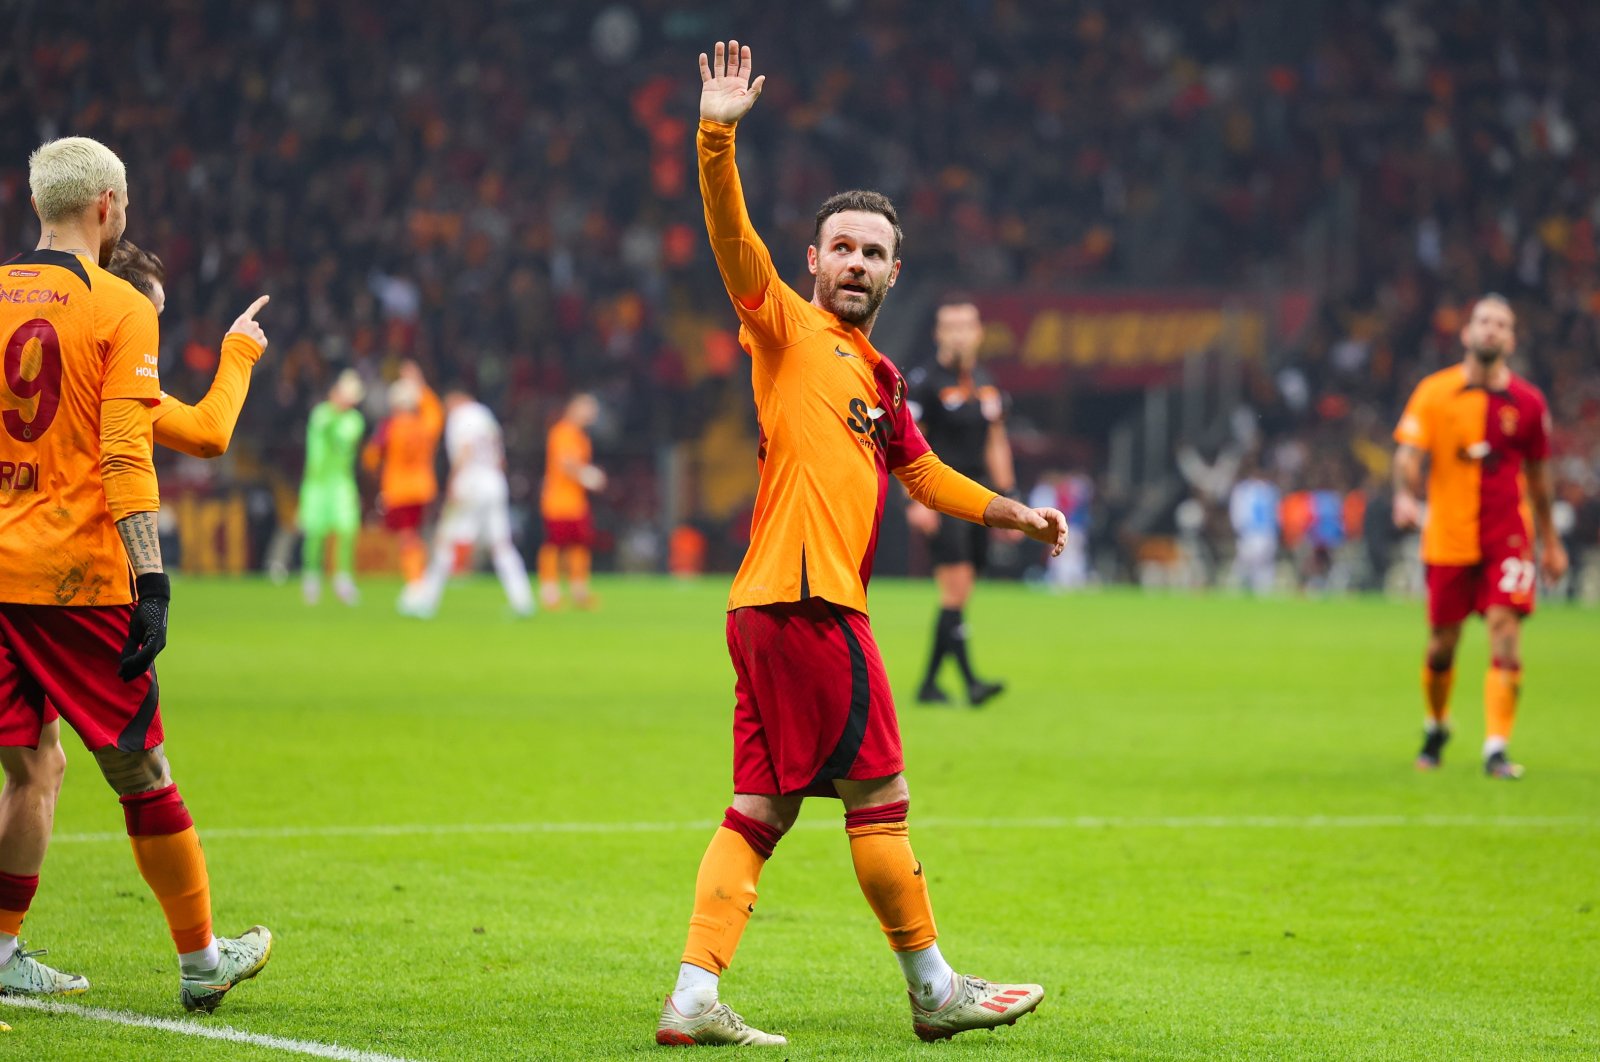 Galatasaray&#039;s Juan Mata celebrates after scoring the team&#039;s second goal during the Süper Lig match against Hatayspor at the NEF Stadium, Istanbul, Türkiye, Jan. 13, 2023. (Getty Images Photo)